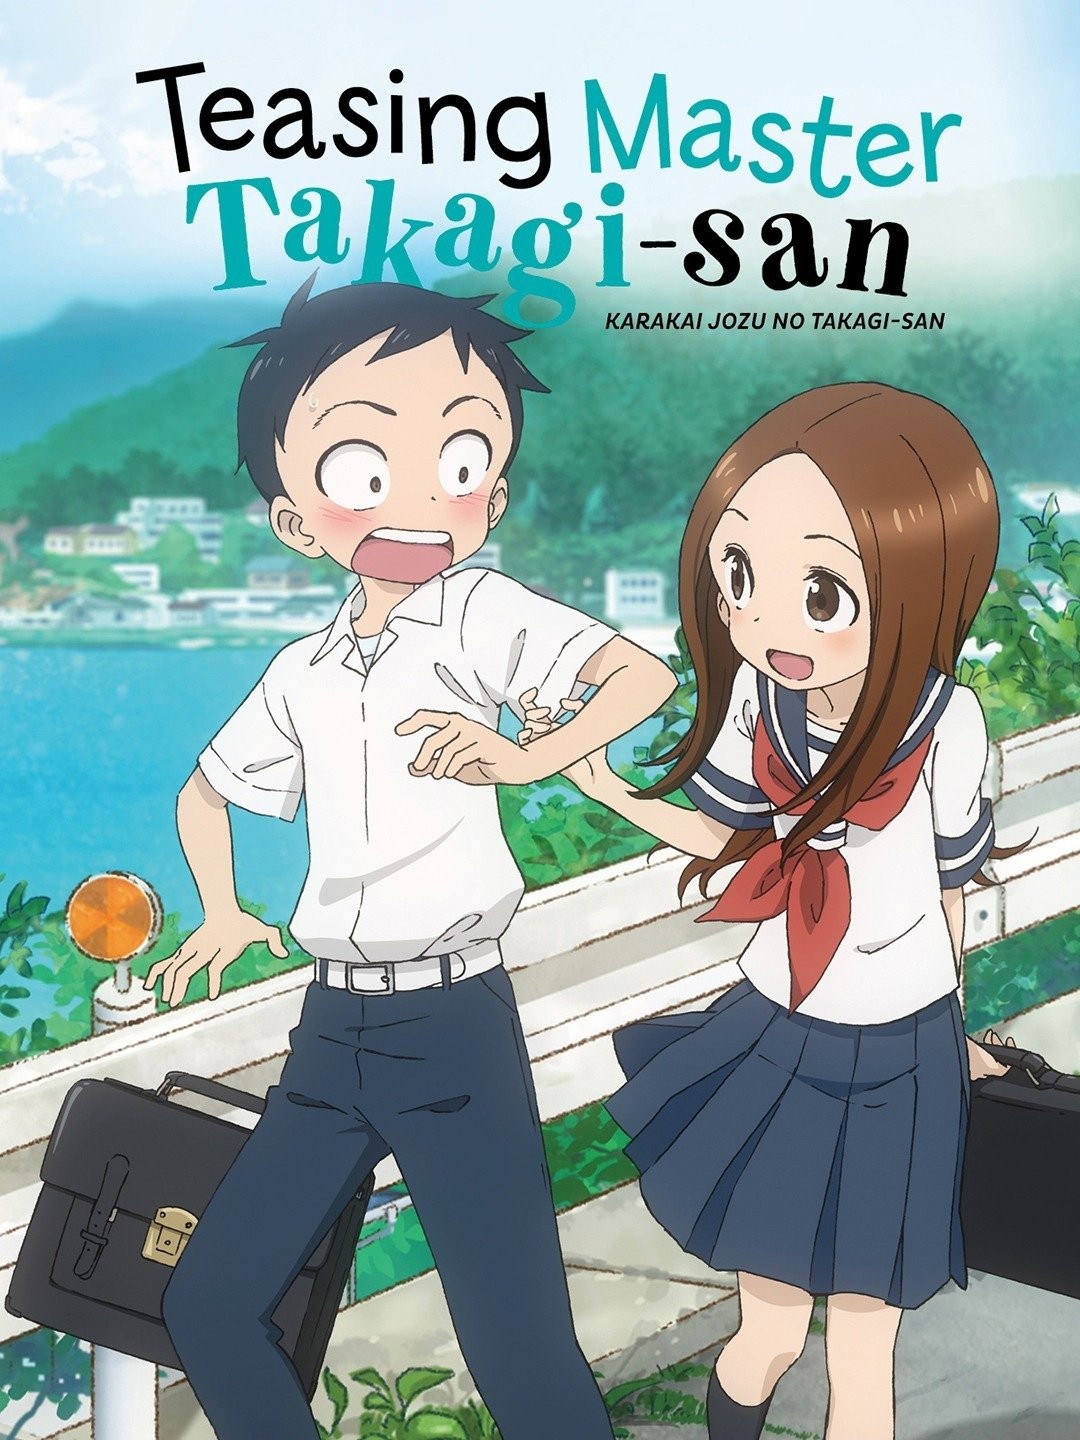  Teasing Master Takagi-san 3 : Movies & TV